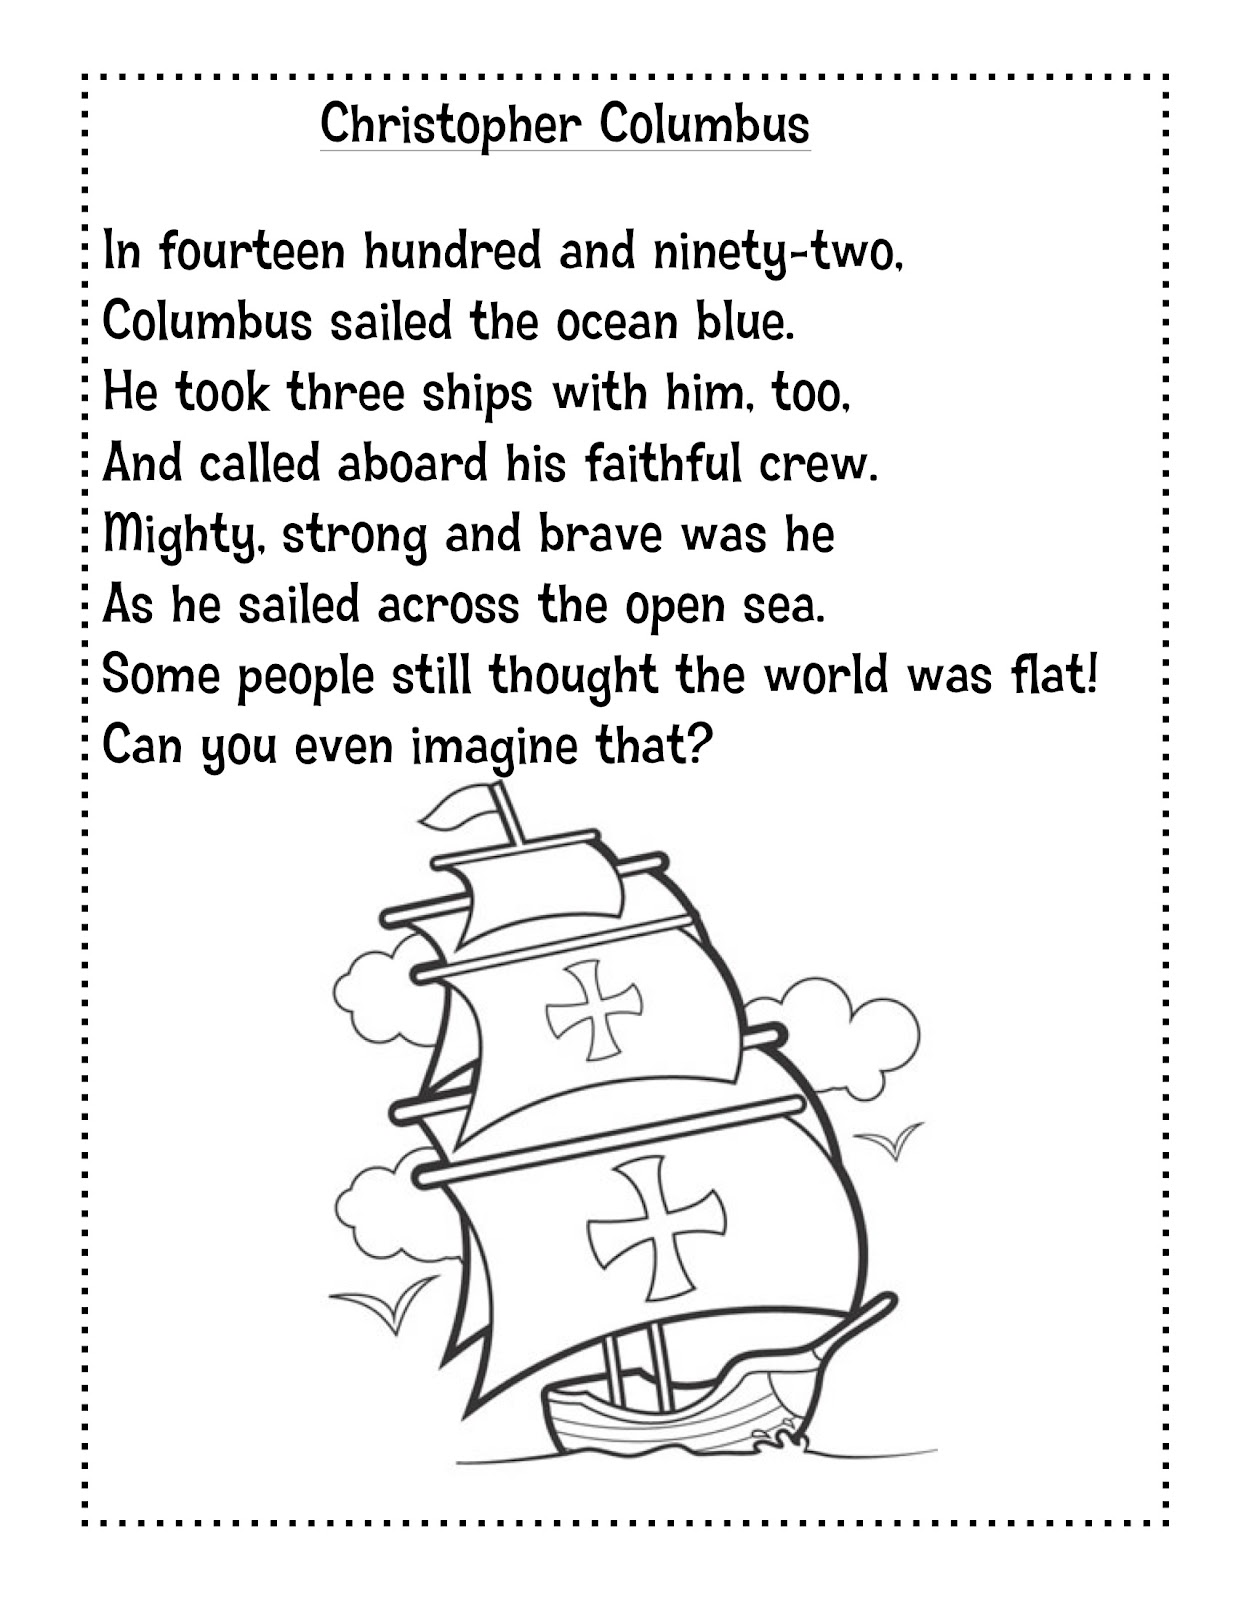 Kids Poem About Christopher Columbus Image